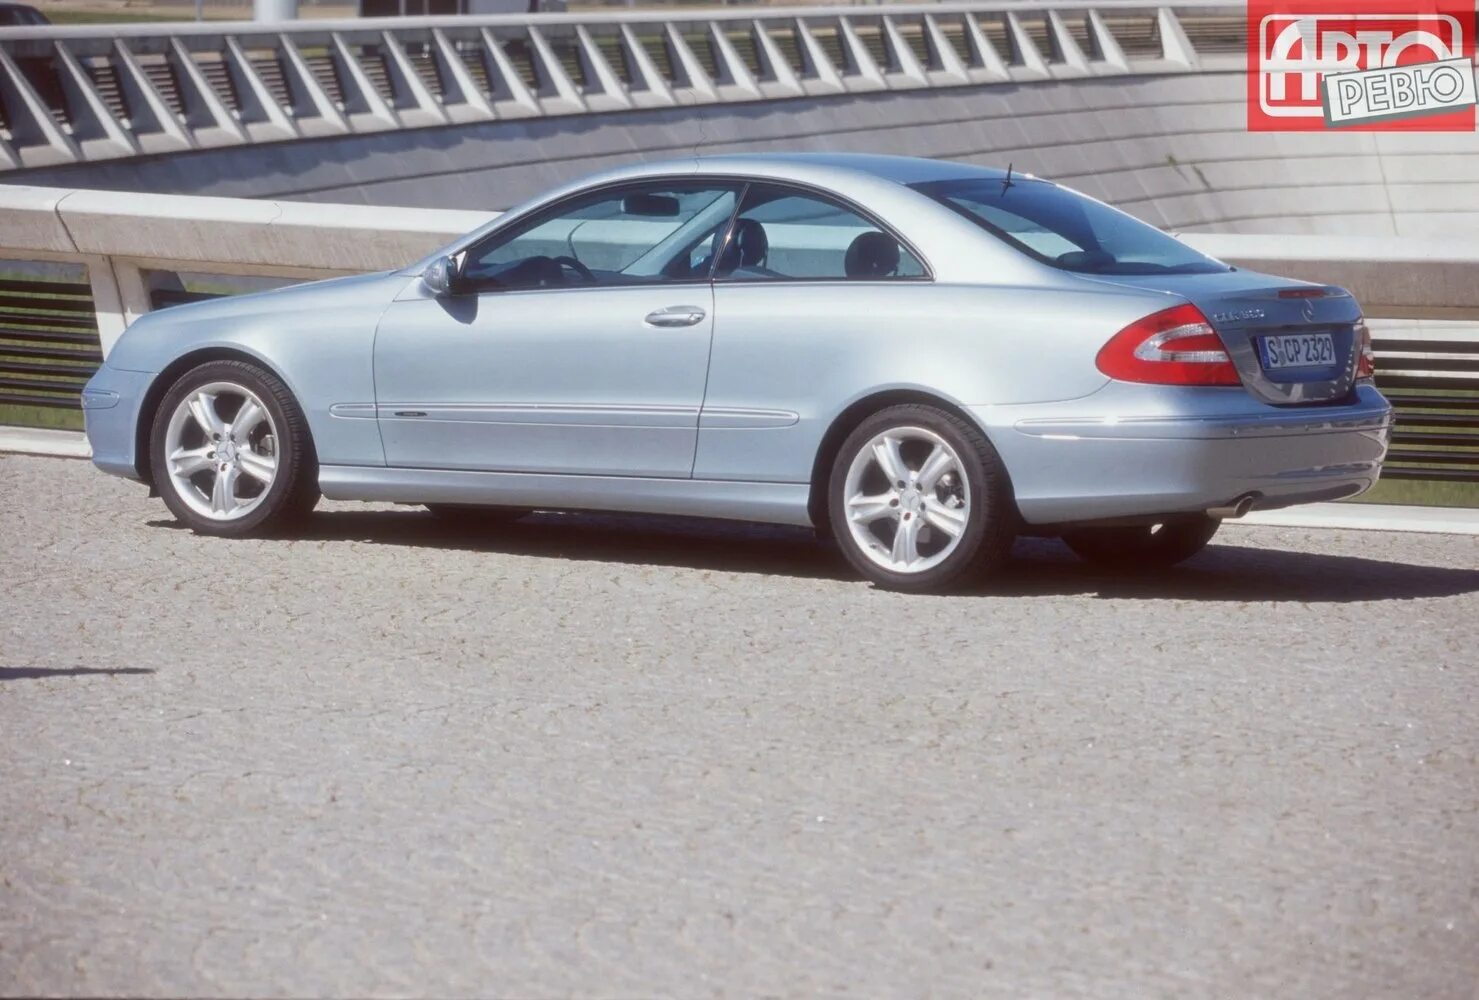 2002 г по 2005 г. Mercedes Benz CLK 2002. Mercedes-Benz CLK купе 2002. Мерседес Бенц купе ЦЛК 2002. Мерседес w209 купе.